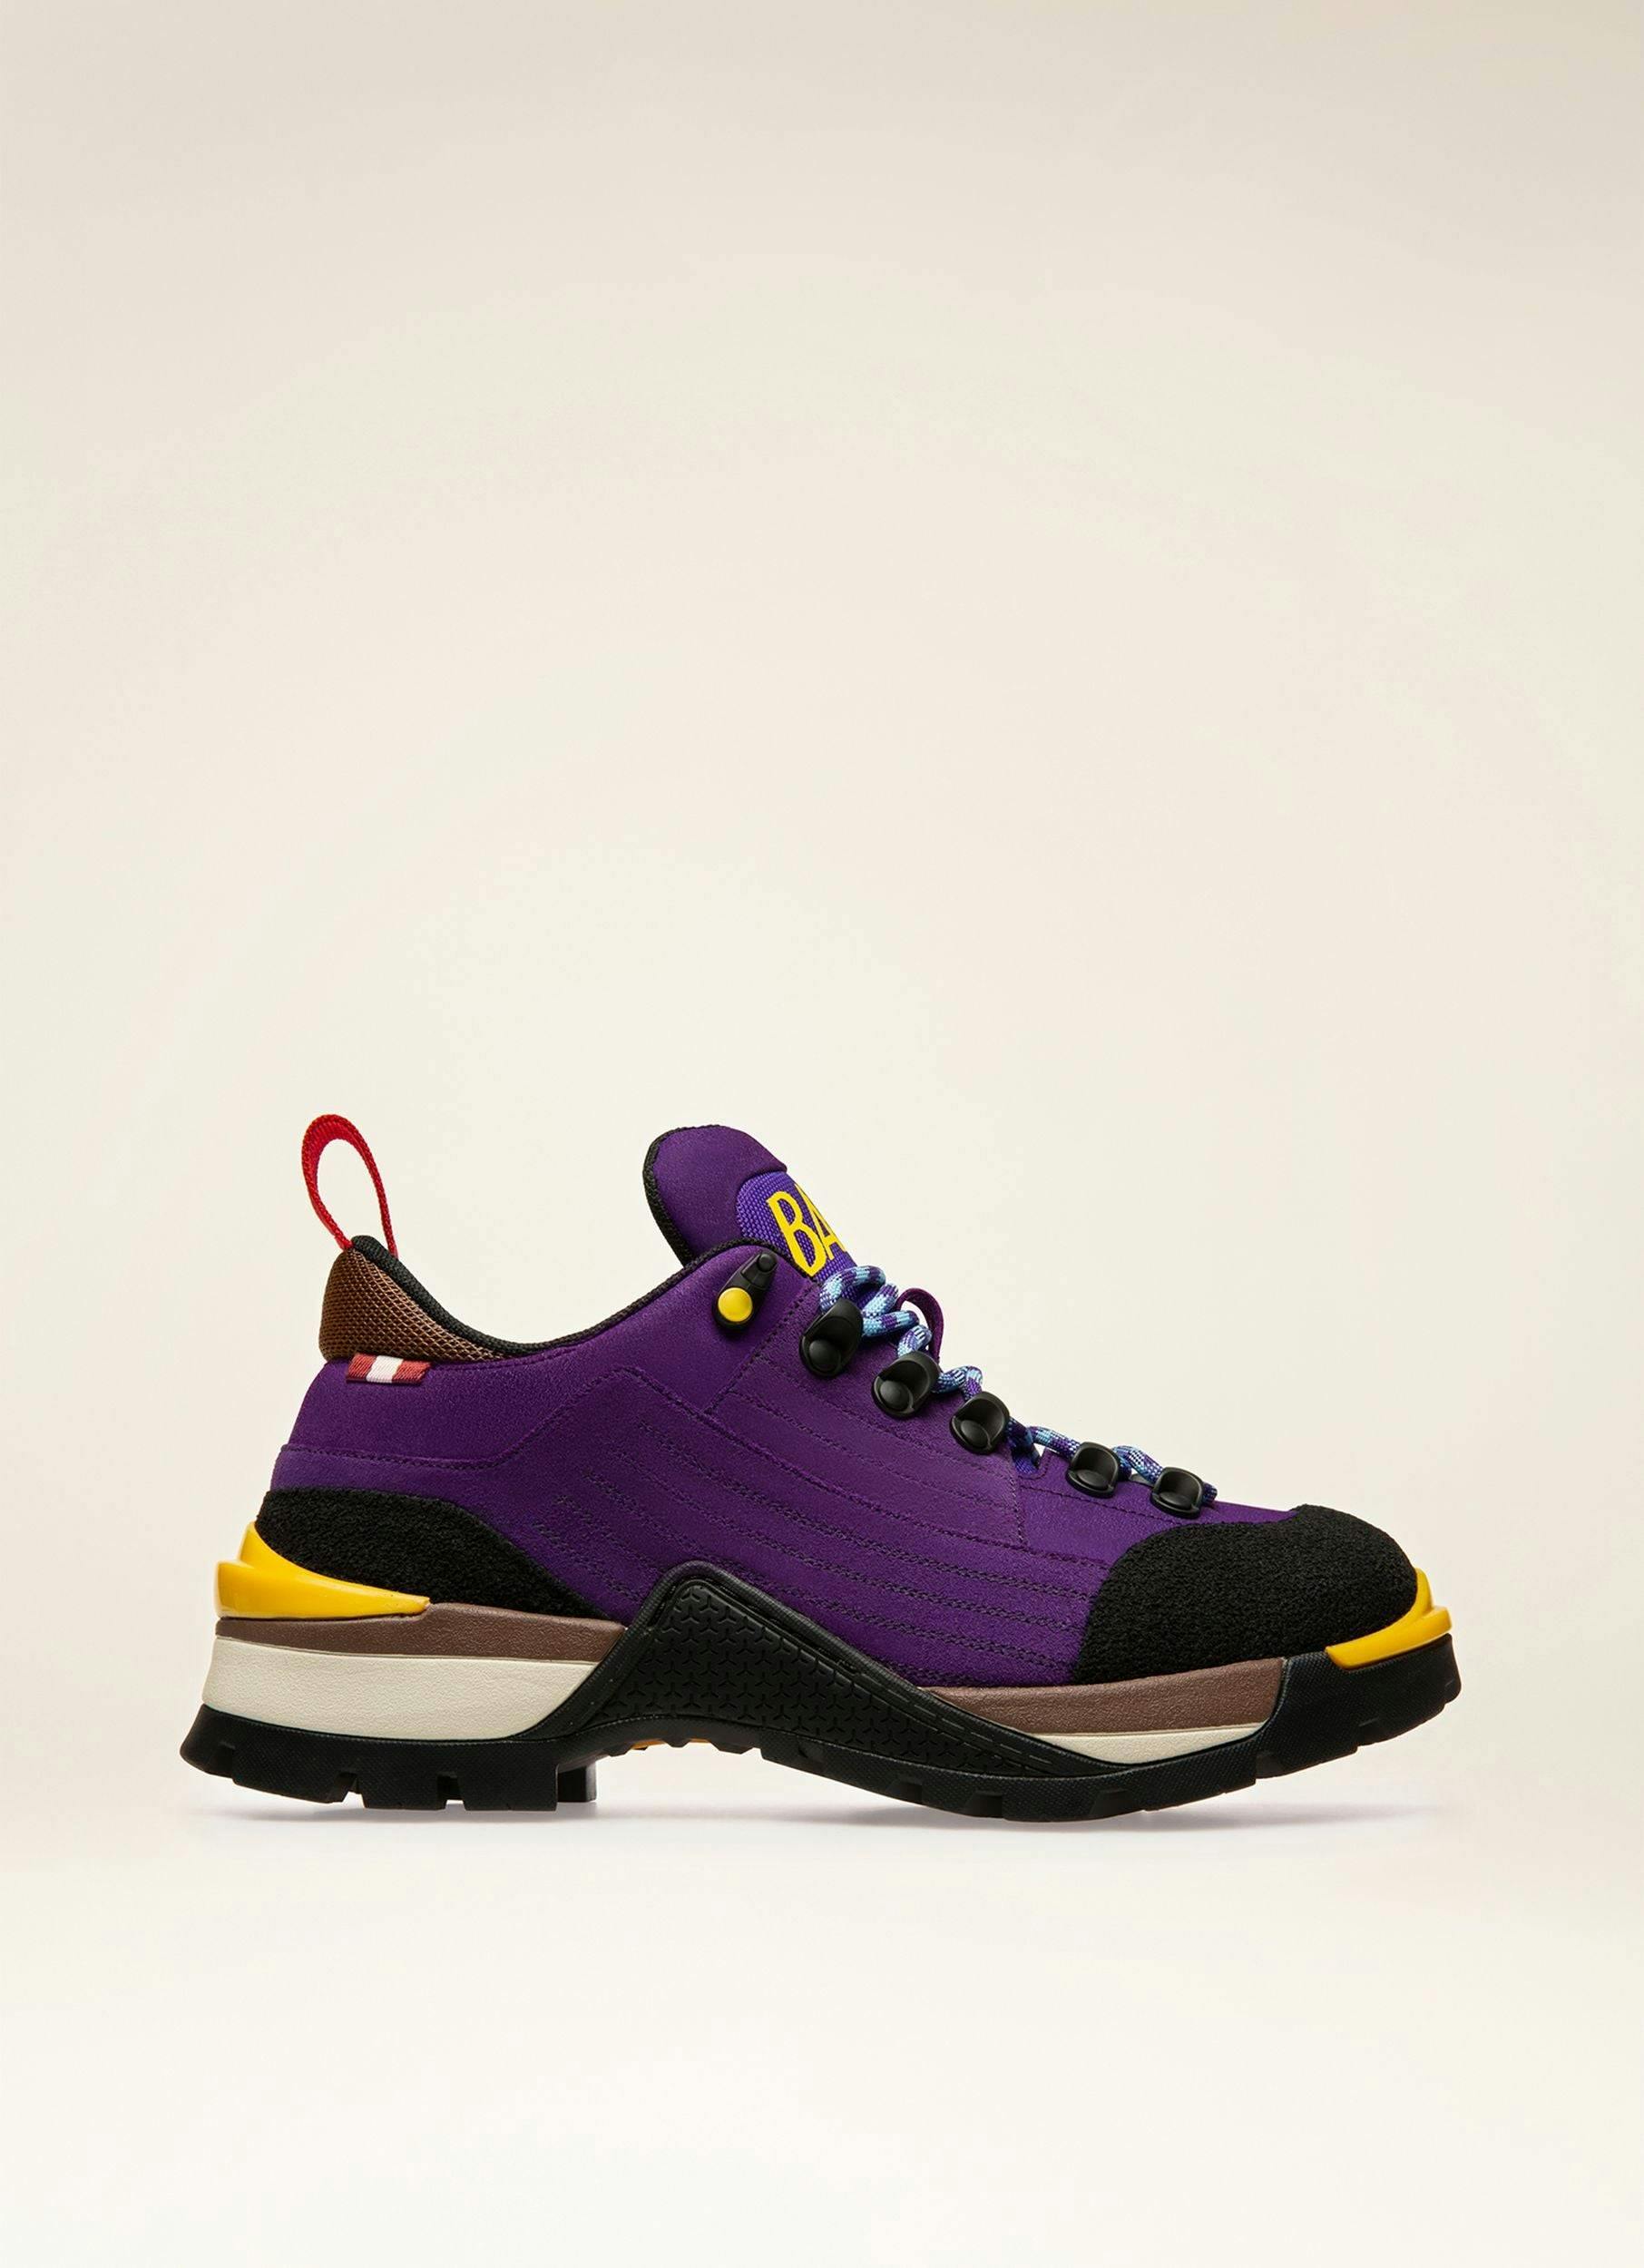 BALLY HIKE Suede Hiking Shoes In Purple - Women's - Bally - 01